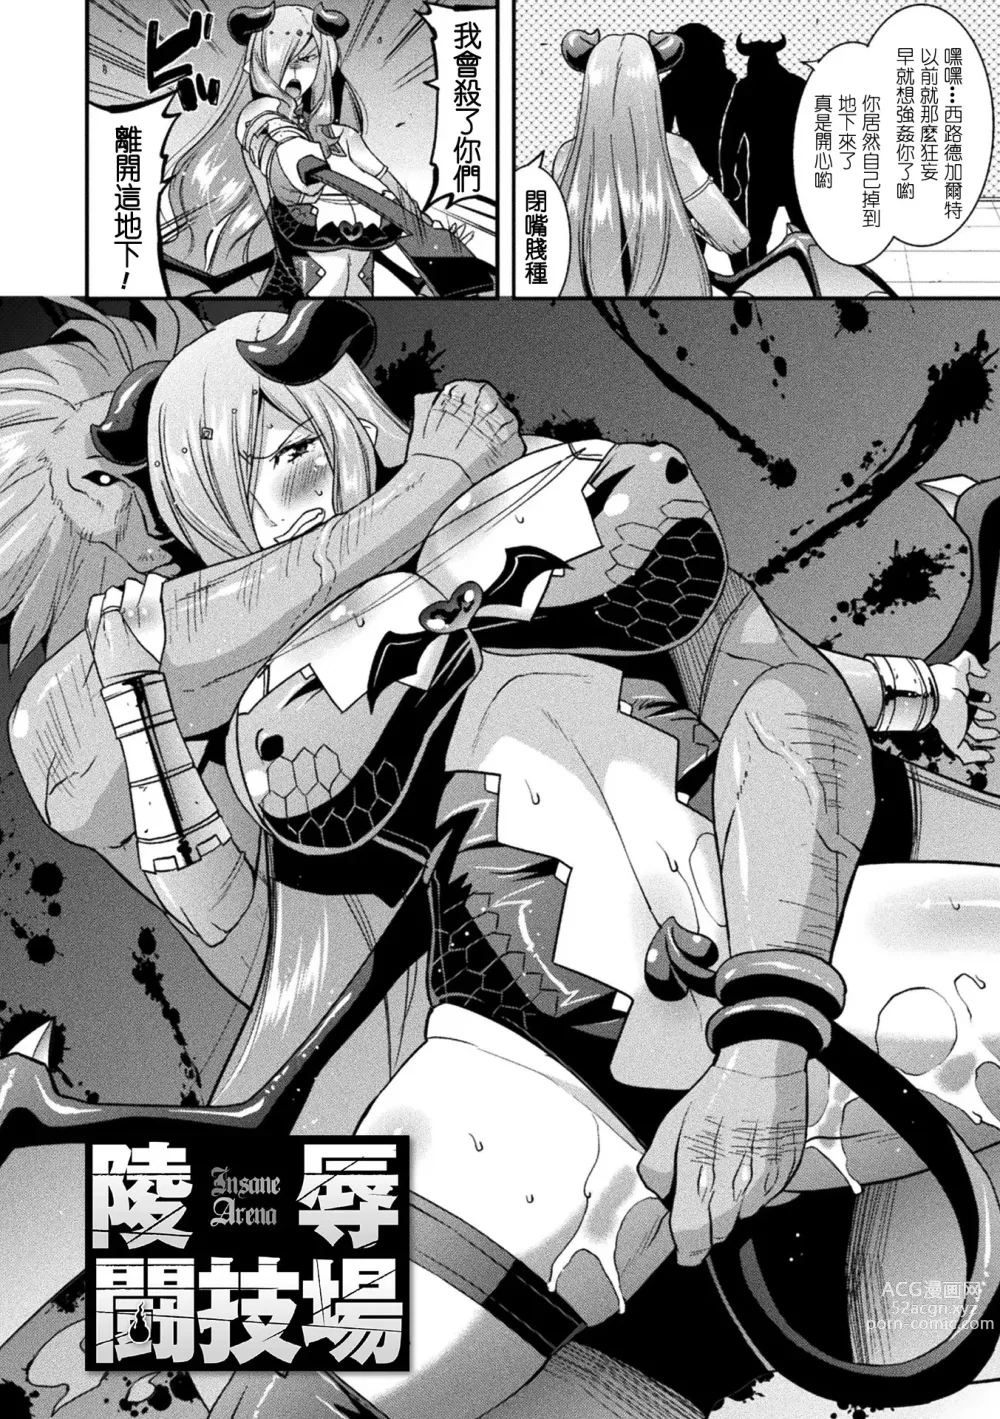 Page 6 of manga Harami Otsu Ikusa Otome